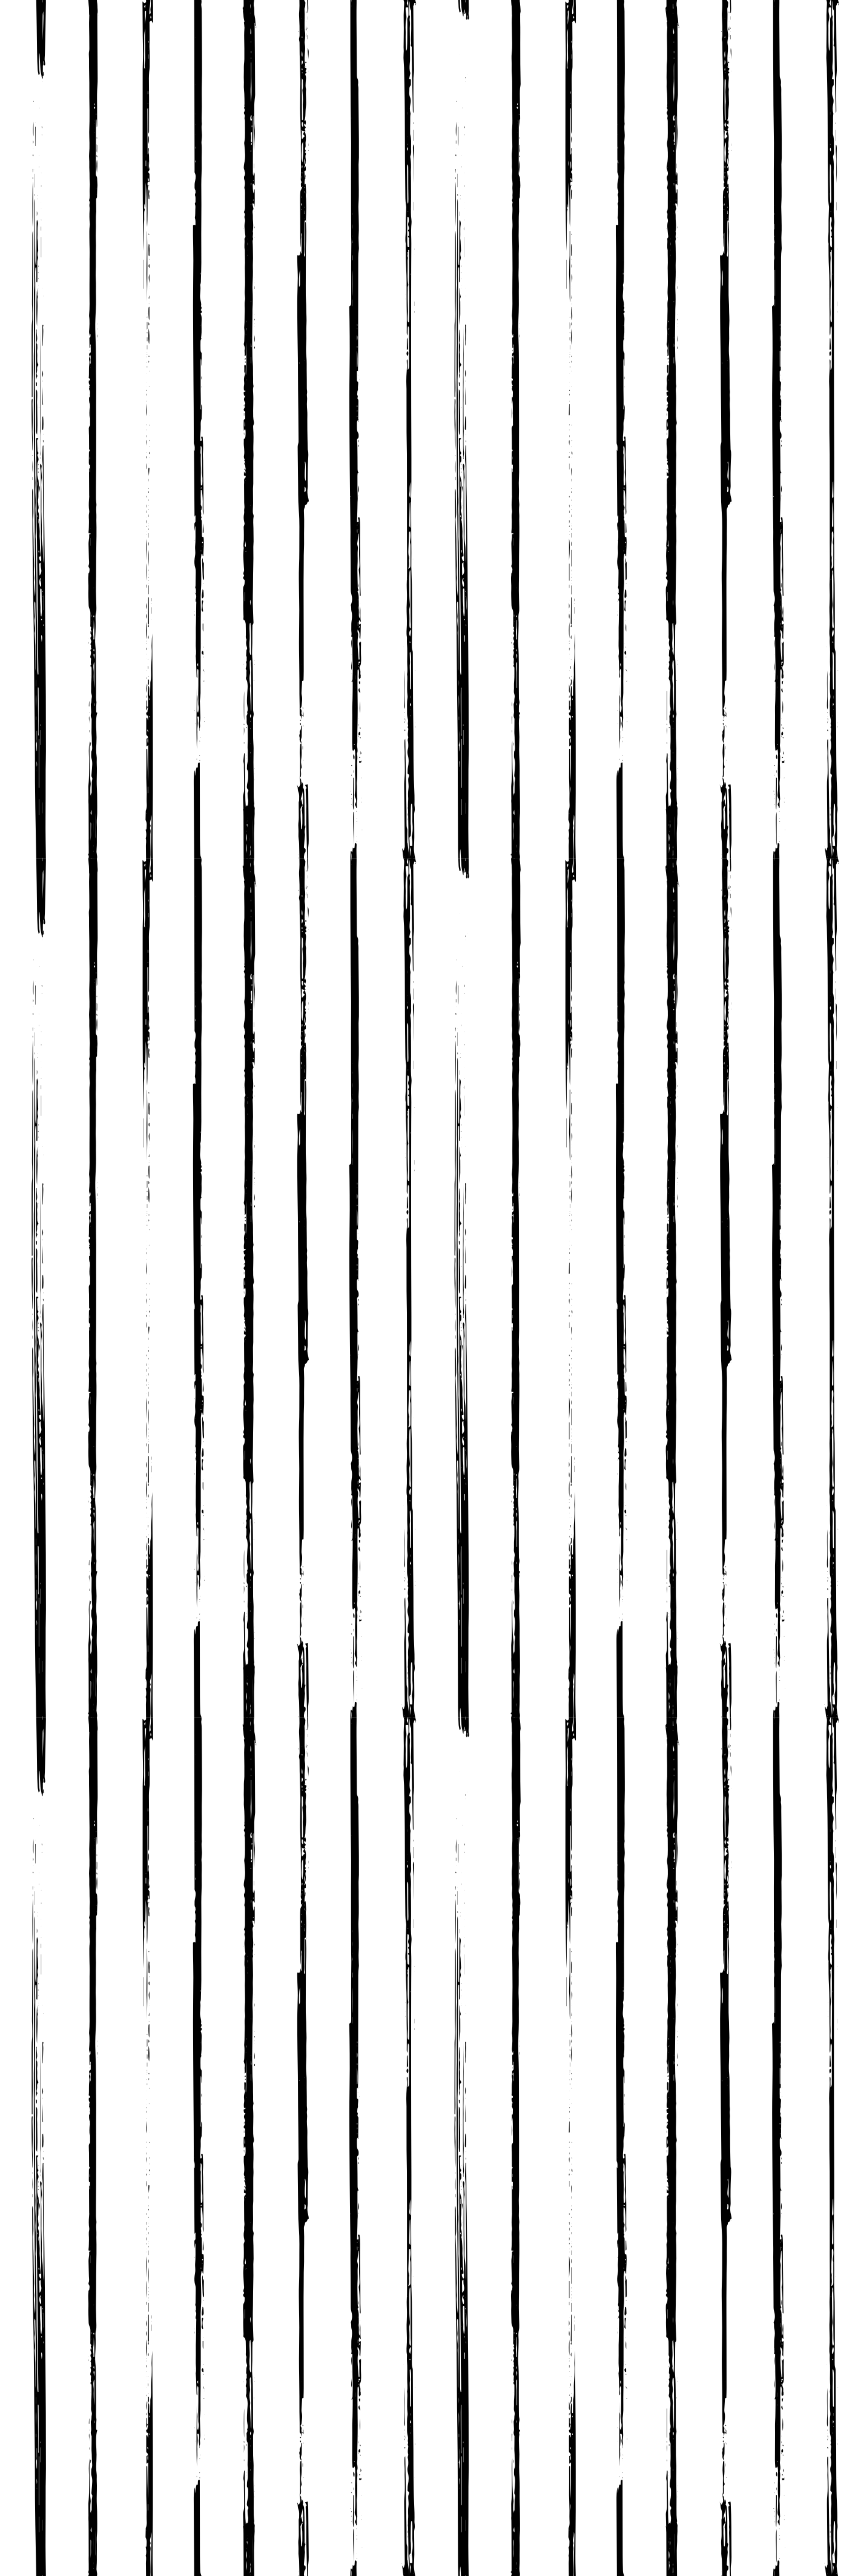 Black and white stripe wallpaper photo  Free Pattern Image on Unsplash